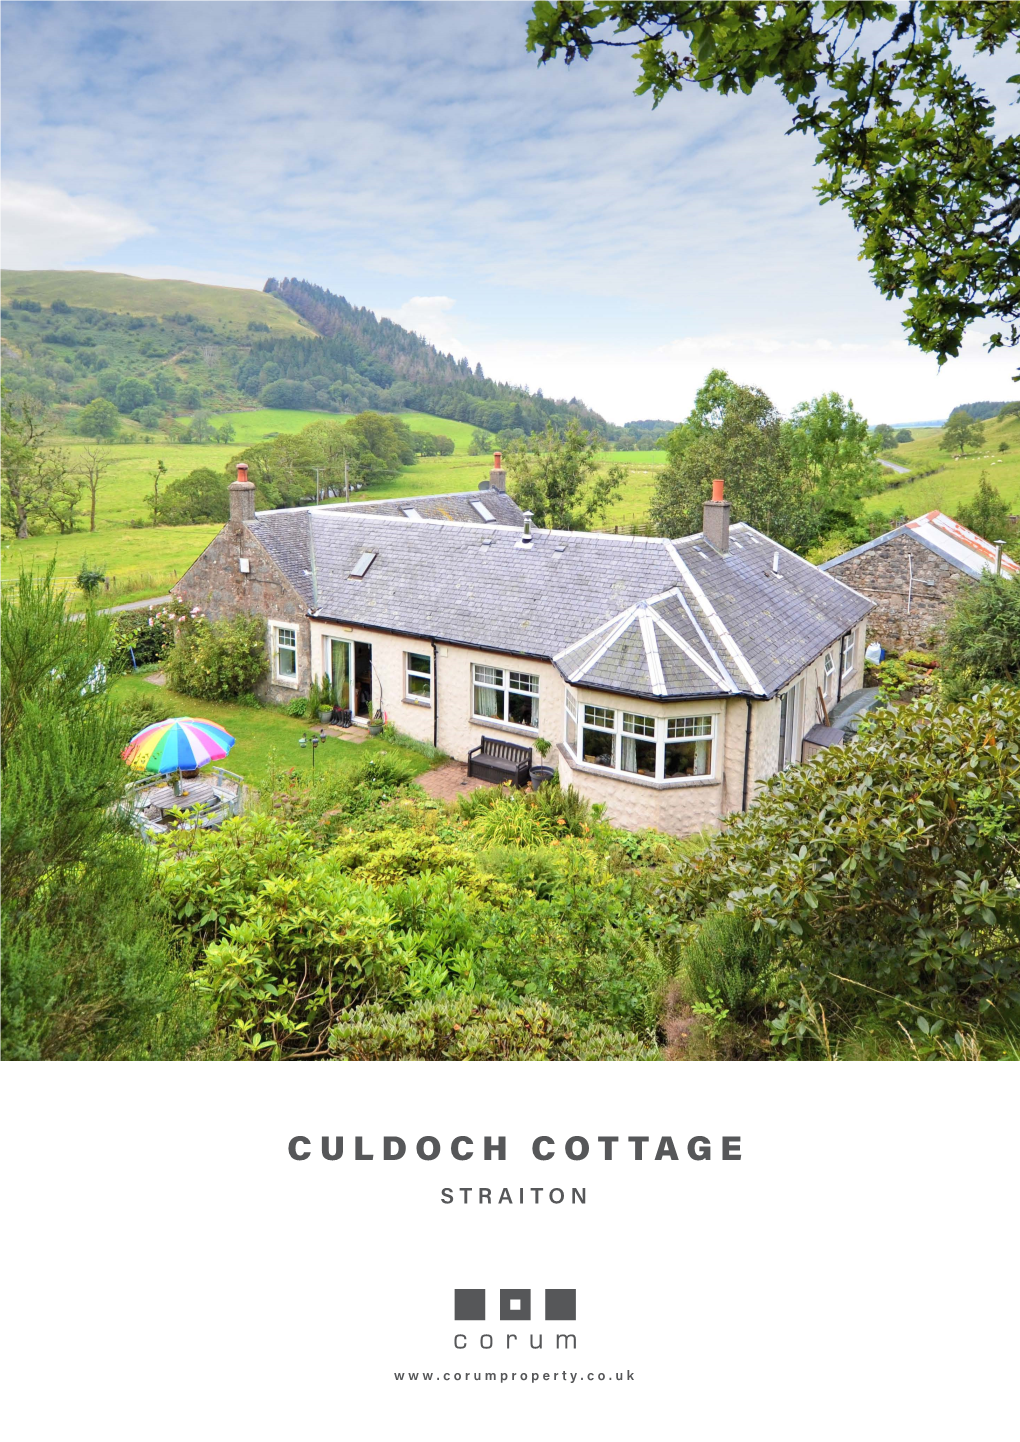 Culdoch Cottage Straiton